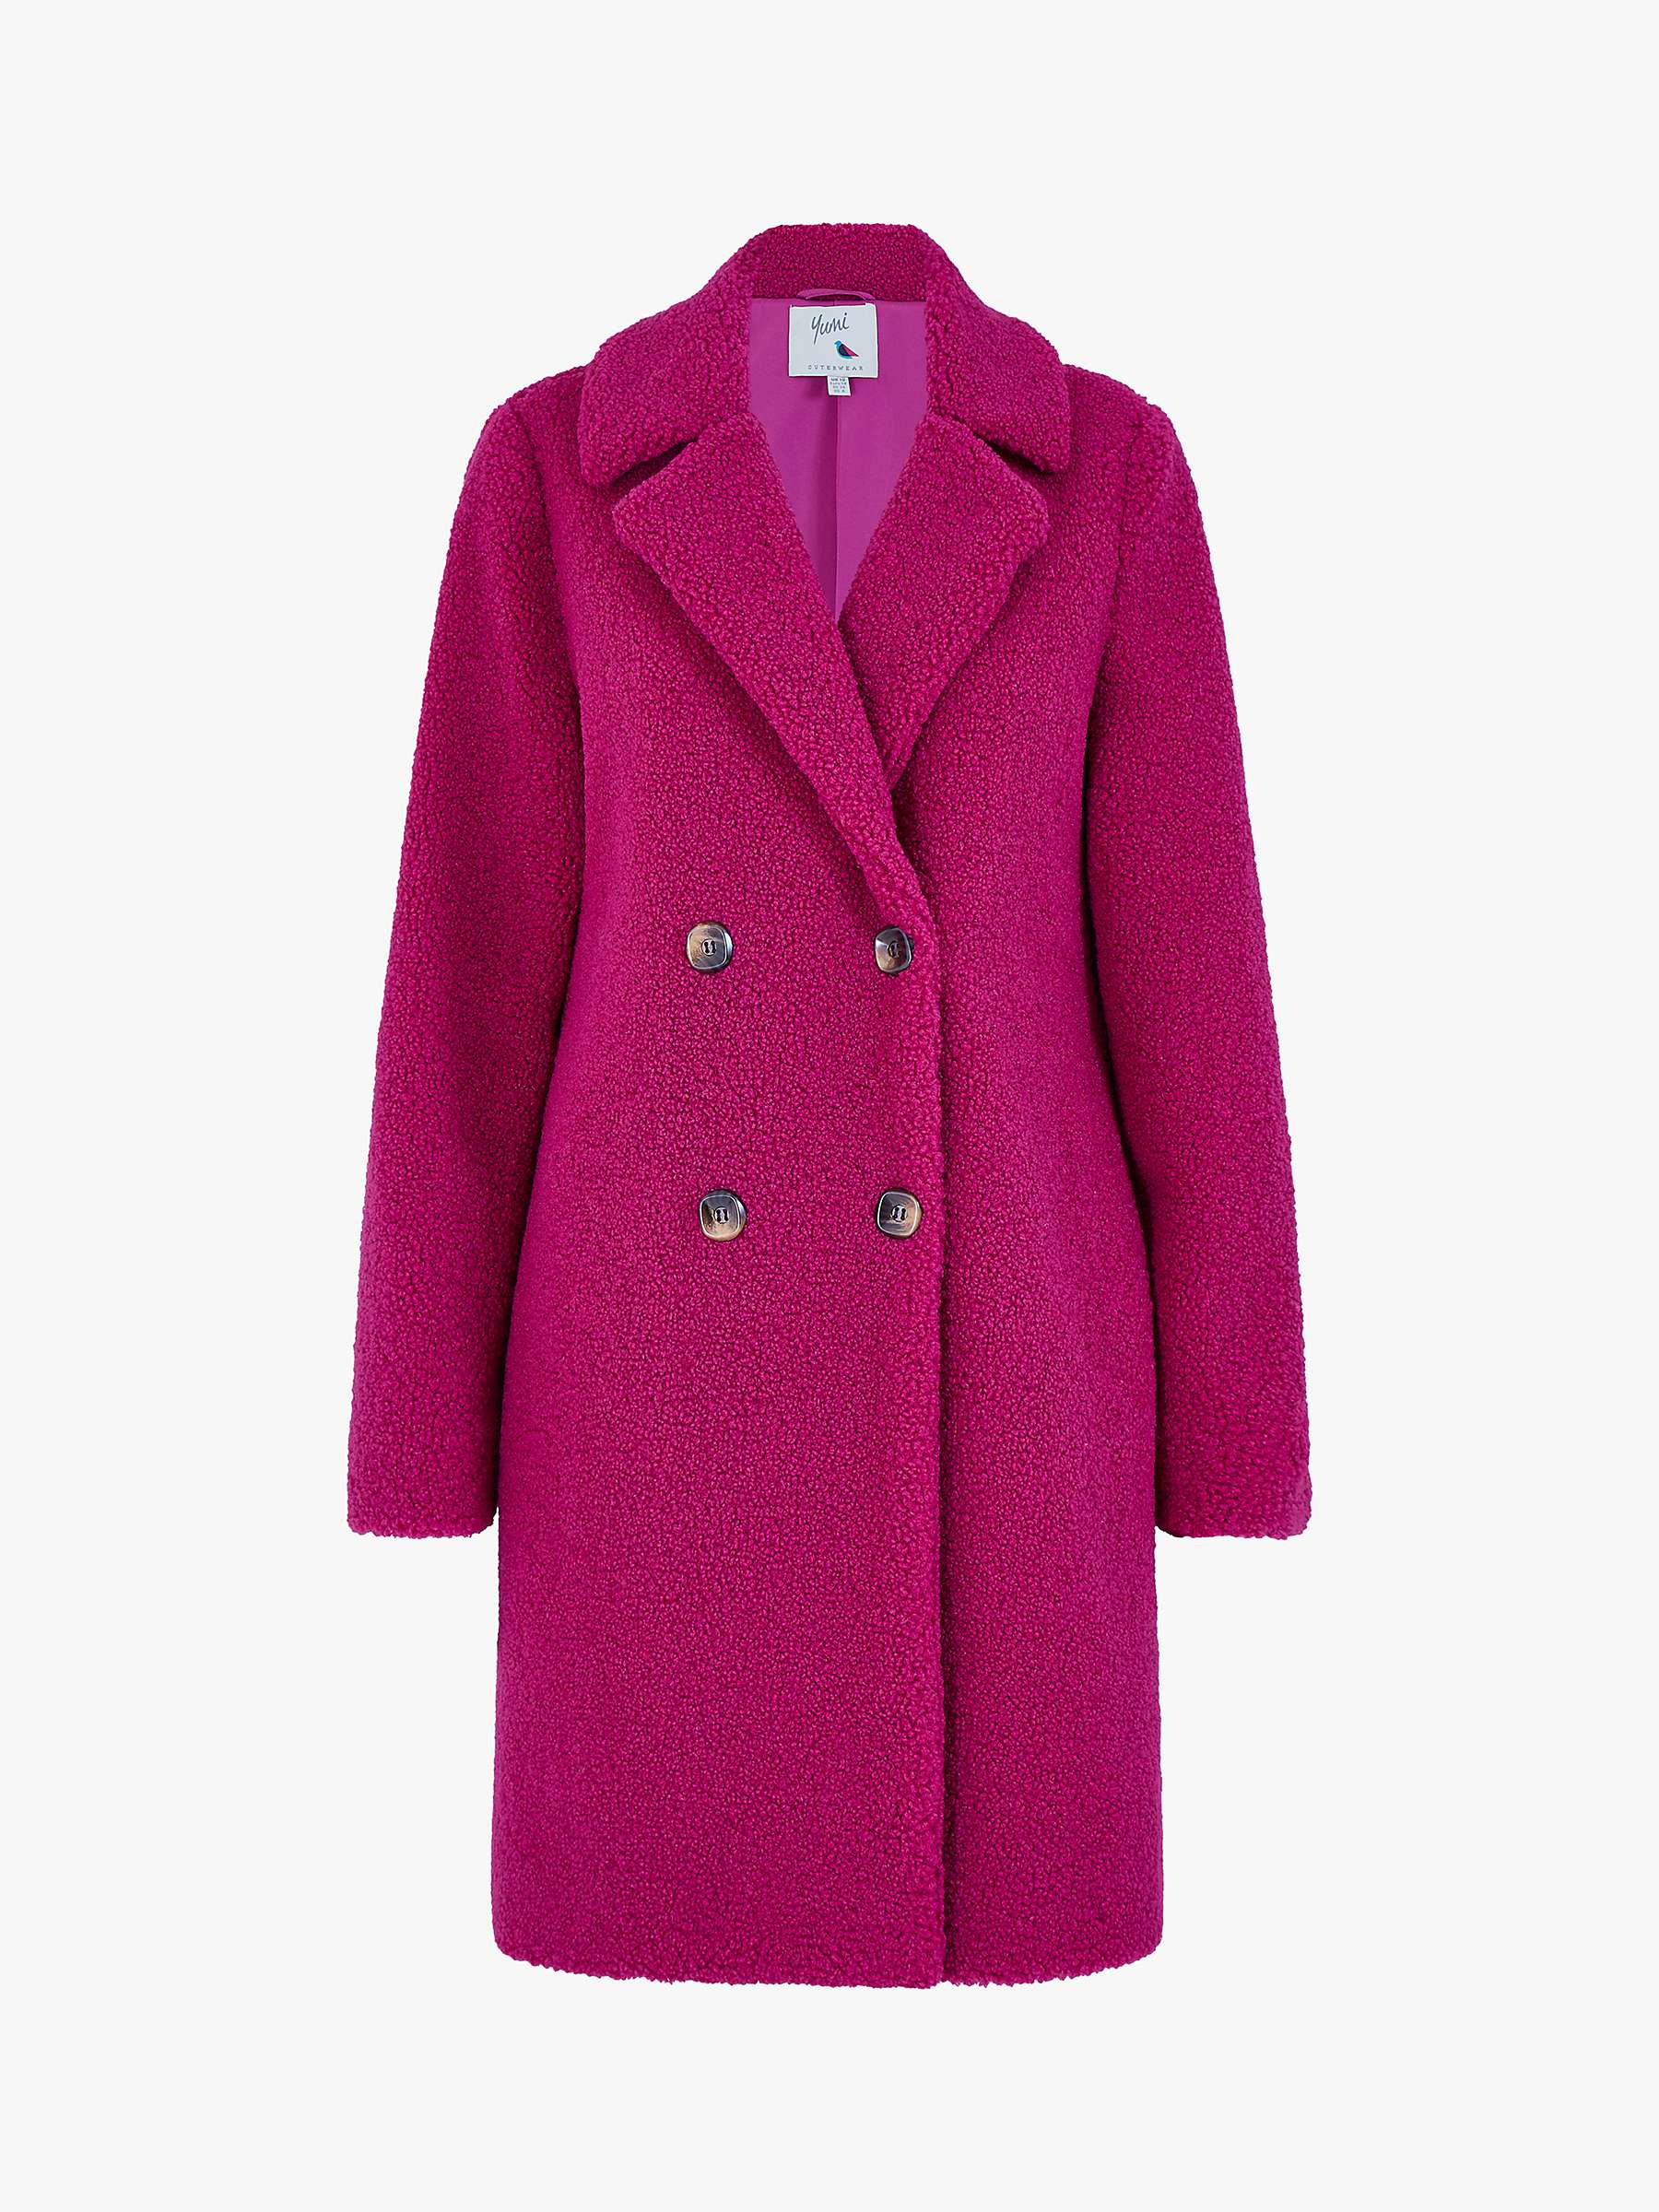 Yumi Teddy Bear Coat, Pink at John Lewis & Partners